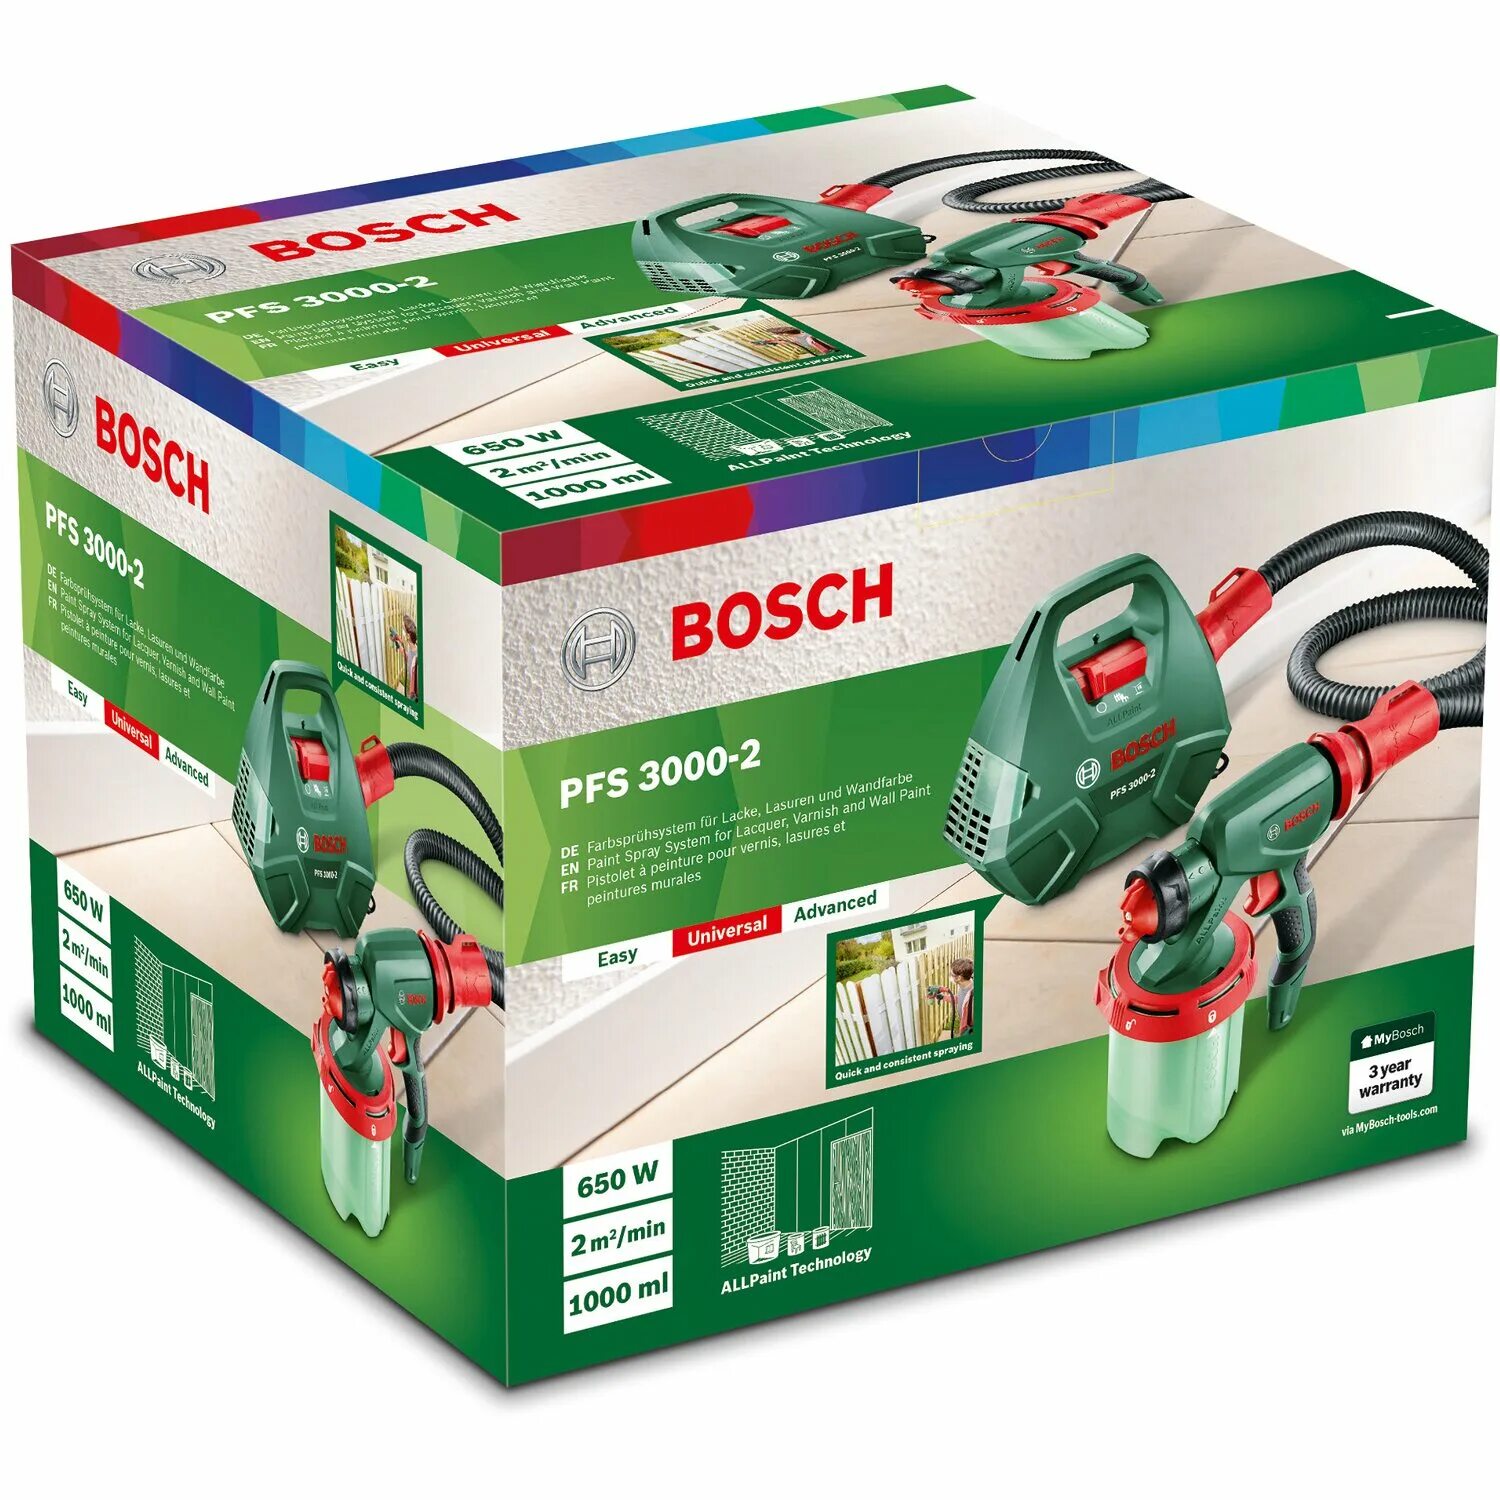 Bosch pfs 3000 2. Сетевой краскопульт Bosch PFS 3000-2. Бош ПФС 3000. Bosch PFS 3000-2 (0603207100). Краскораспылитель Bosch PFS 3000-2 0.